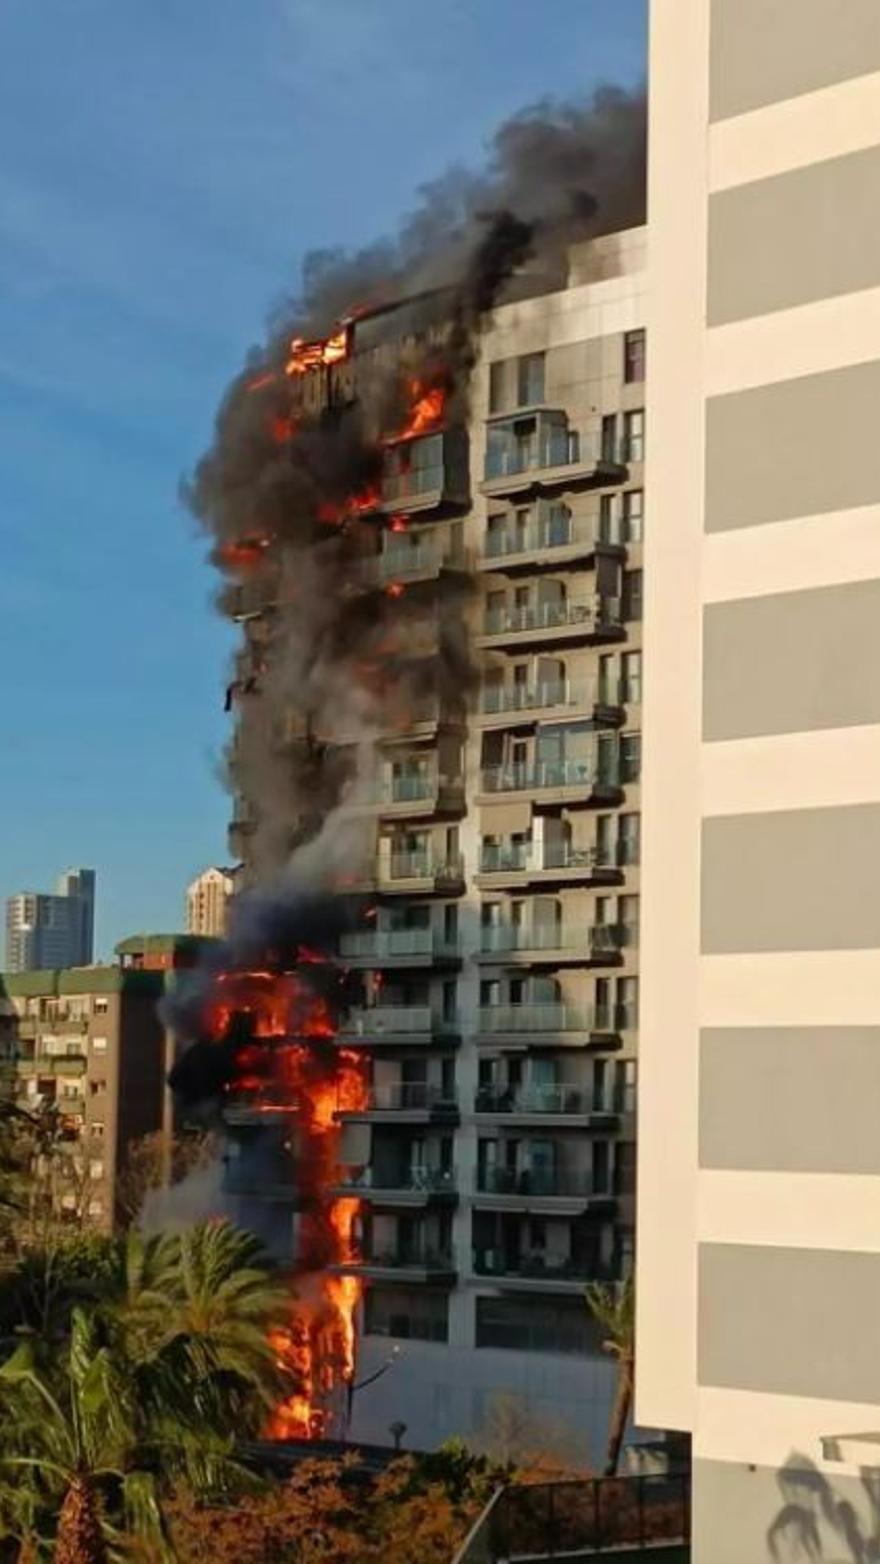 GALERIA | Un incendi devora dos edificis a València